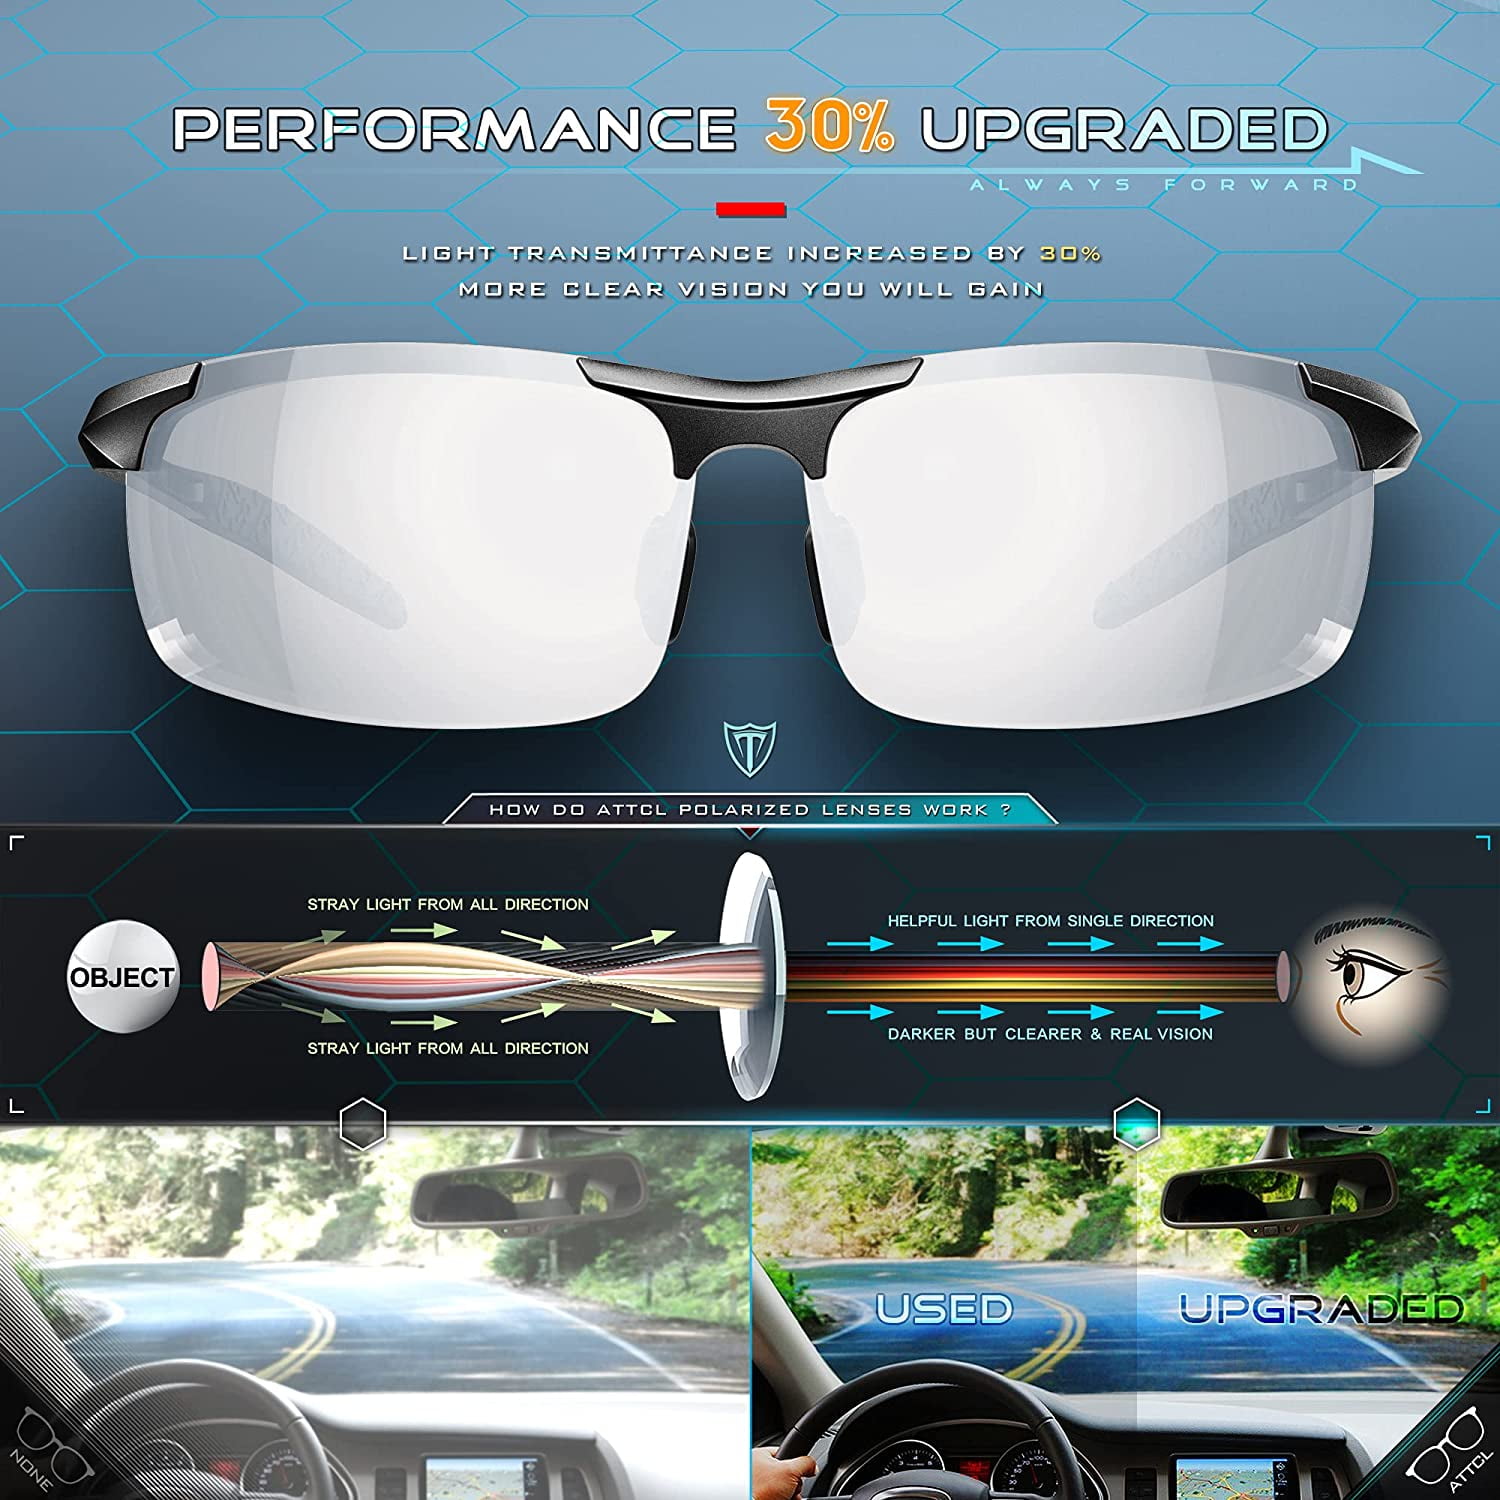 ATTCL Mens Sports Driving Polarized Sunglasses for Men Al-mg metal